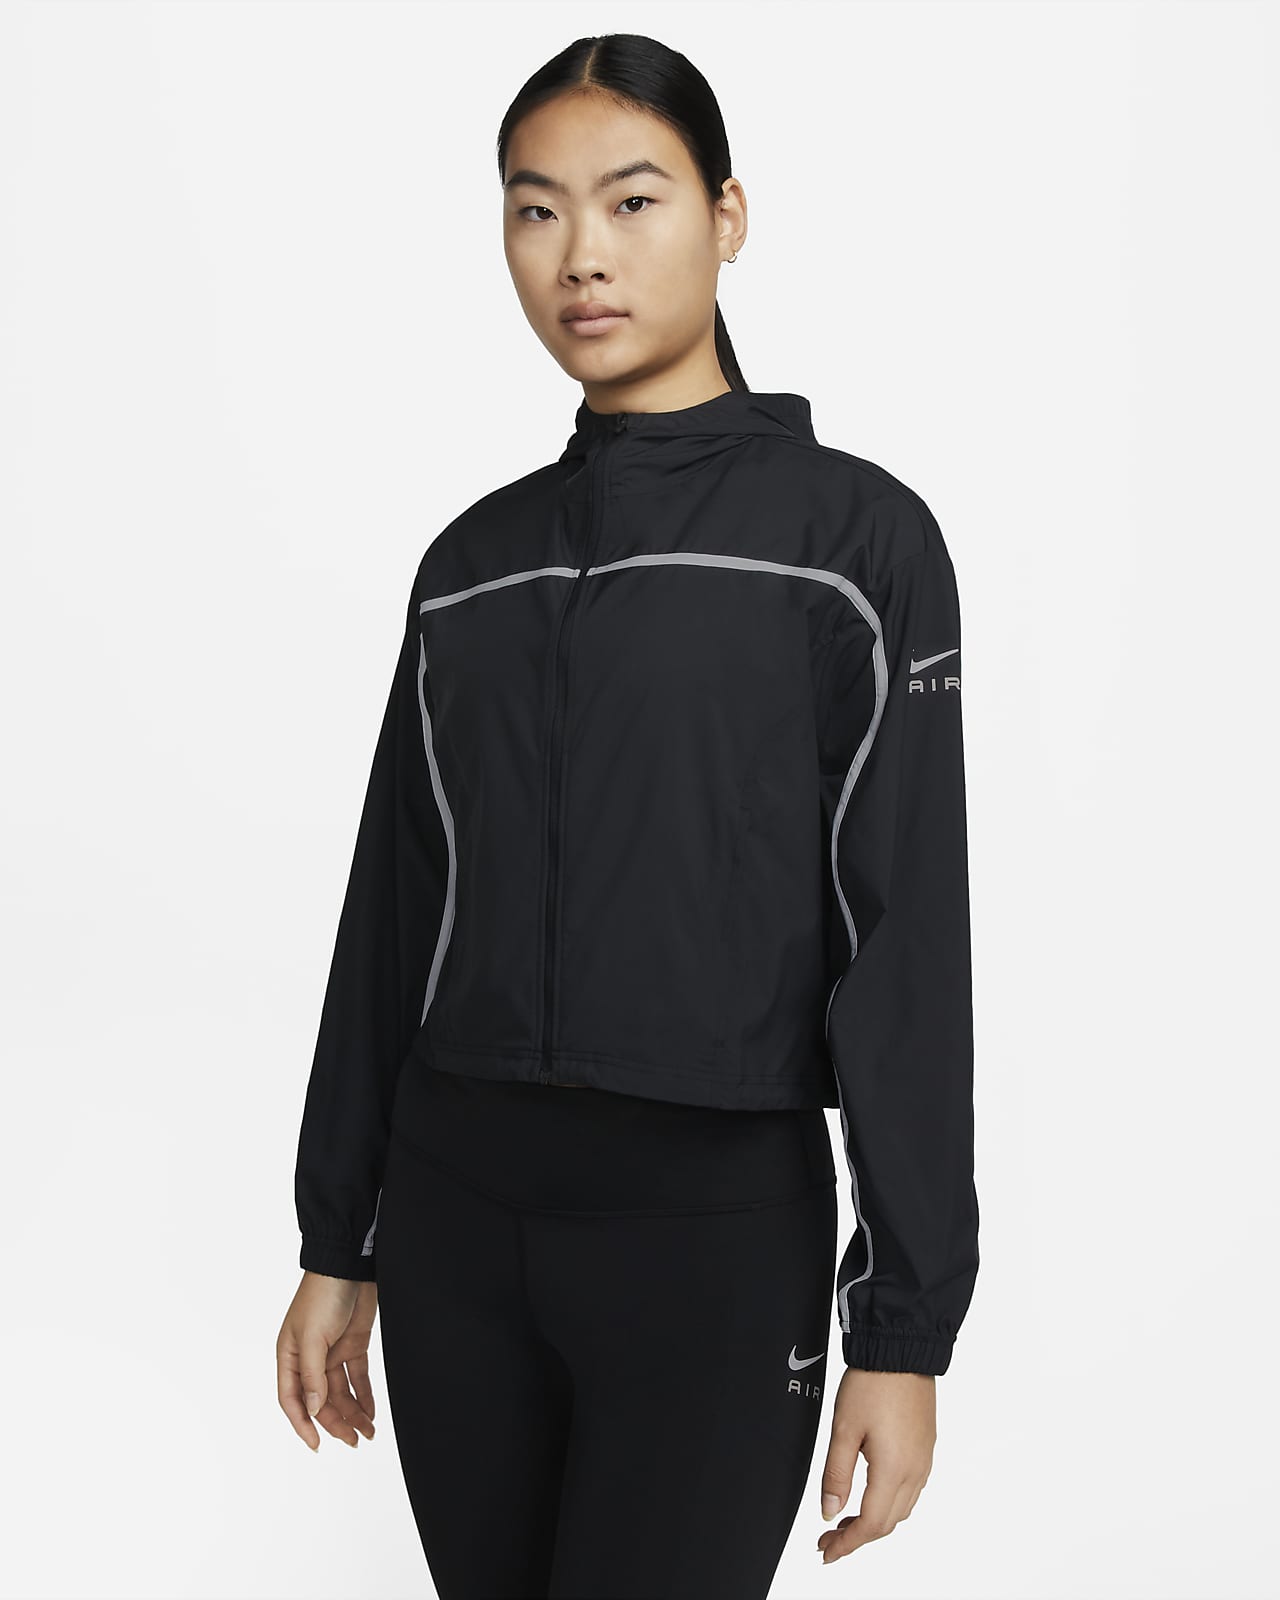 Air Women's Jacket. Nike